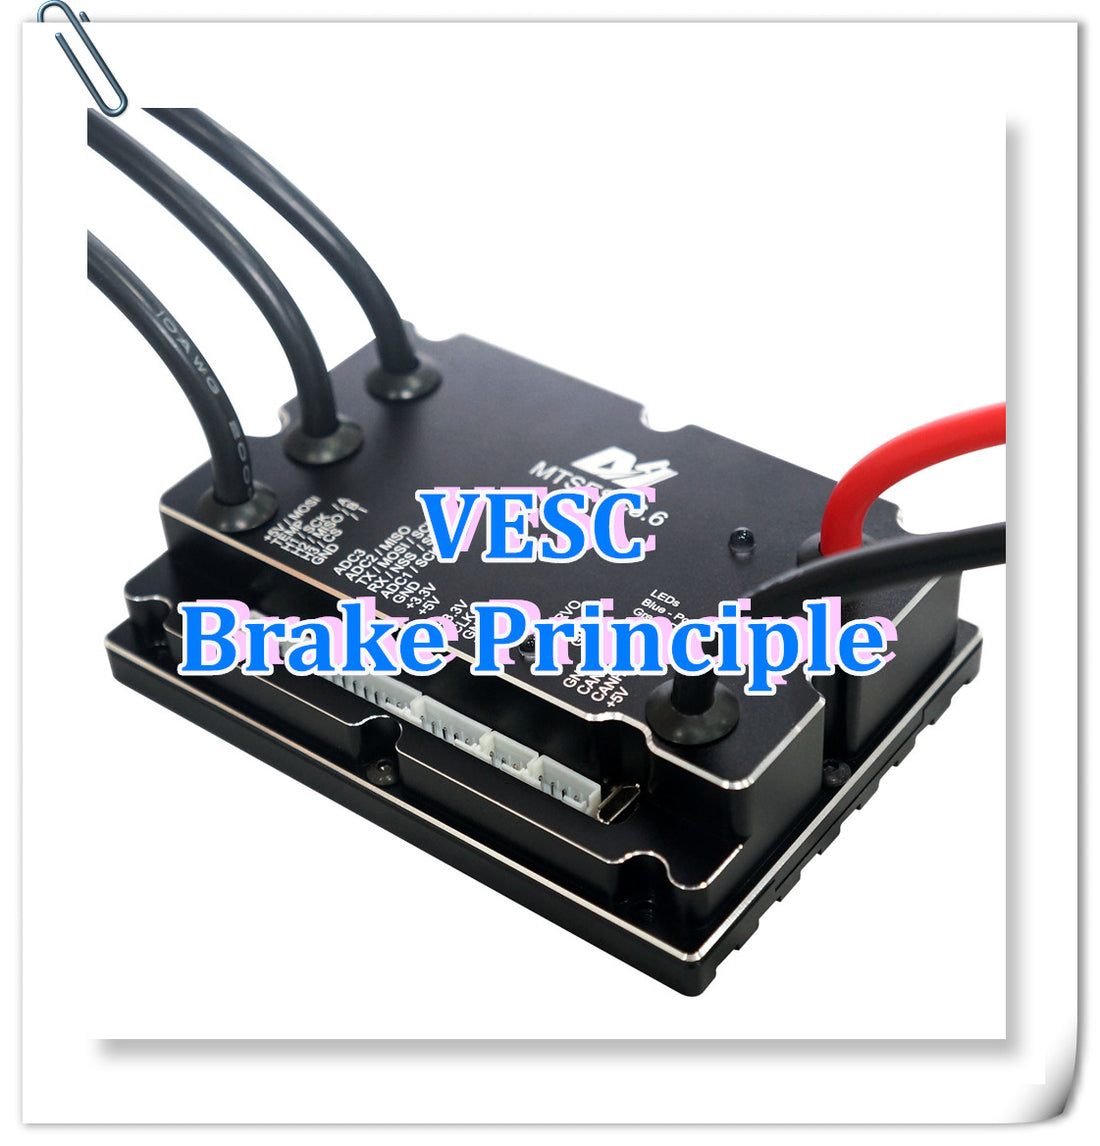 VESC Brake Principle